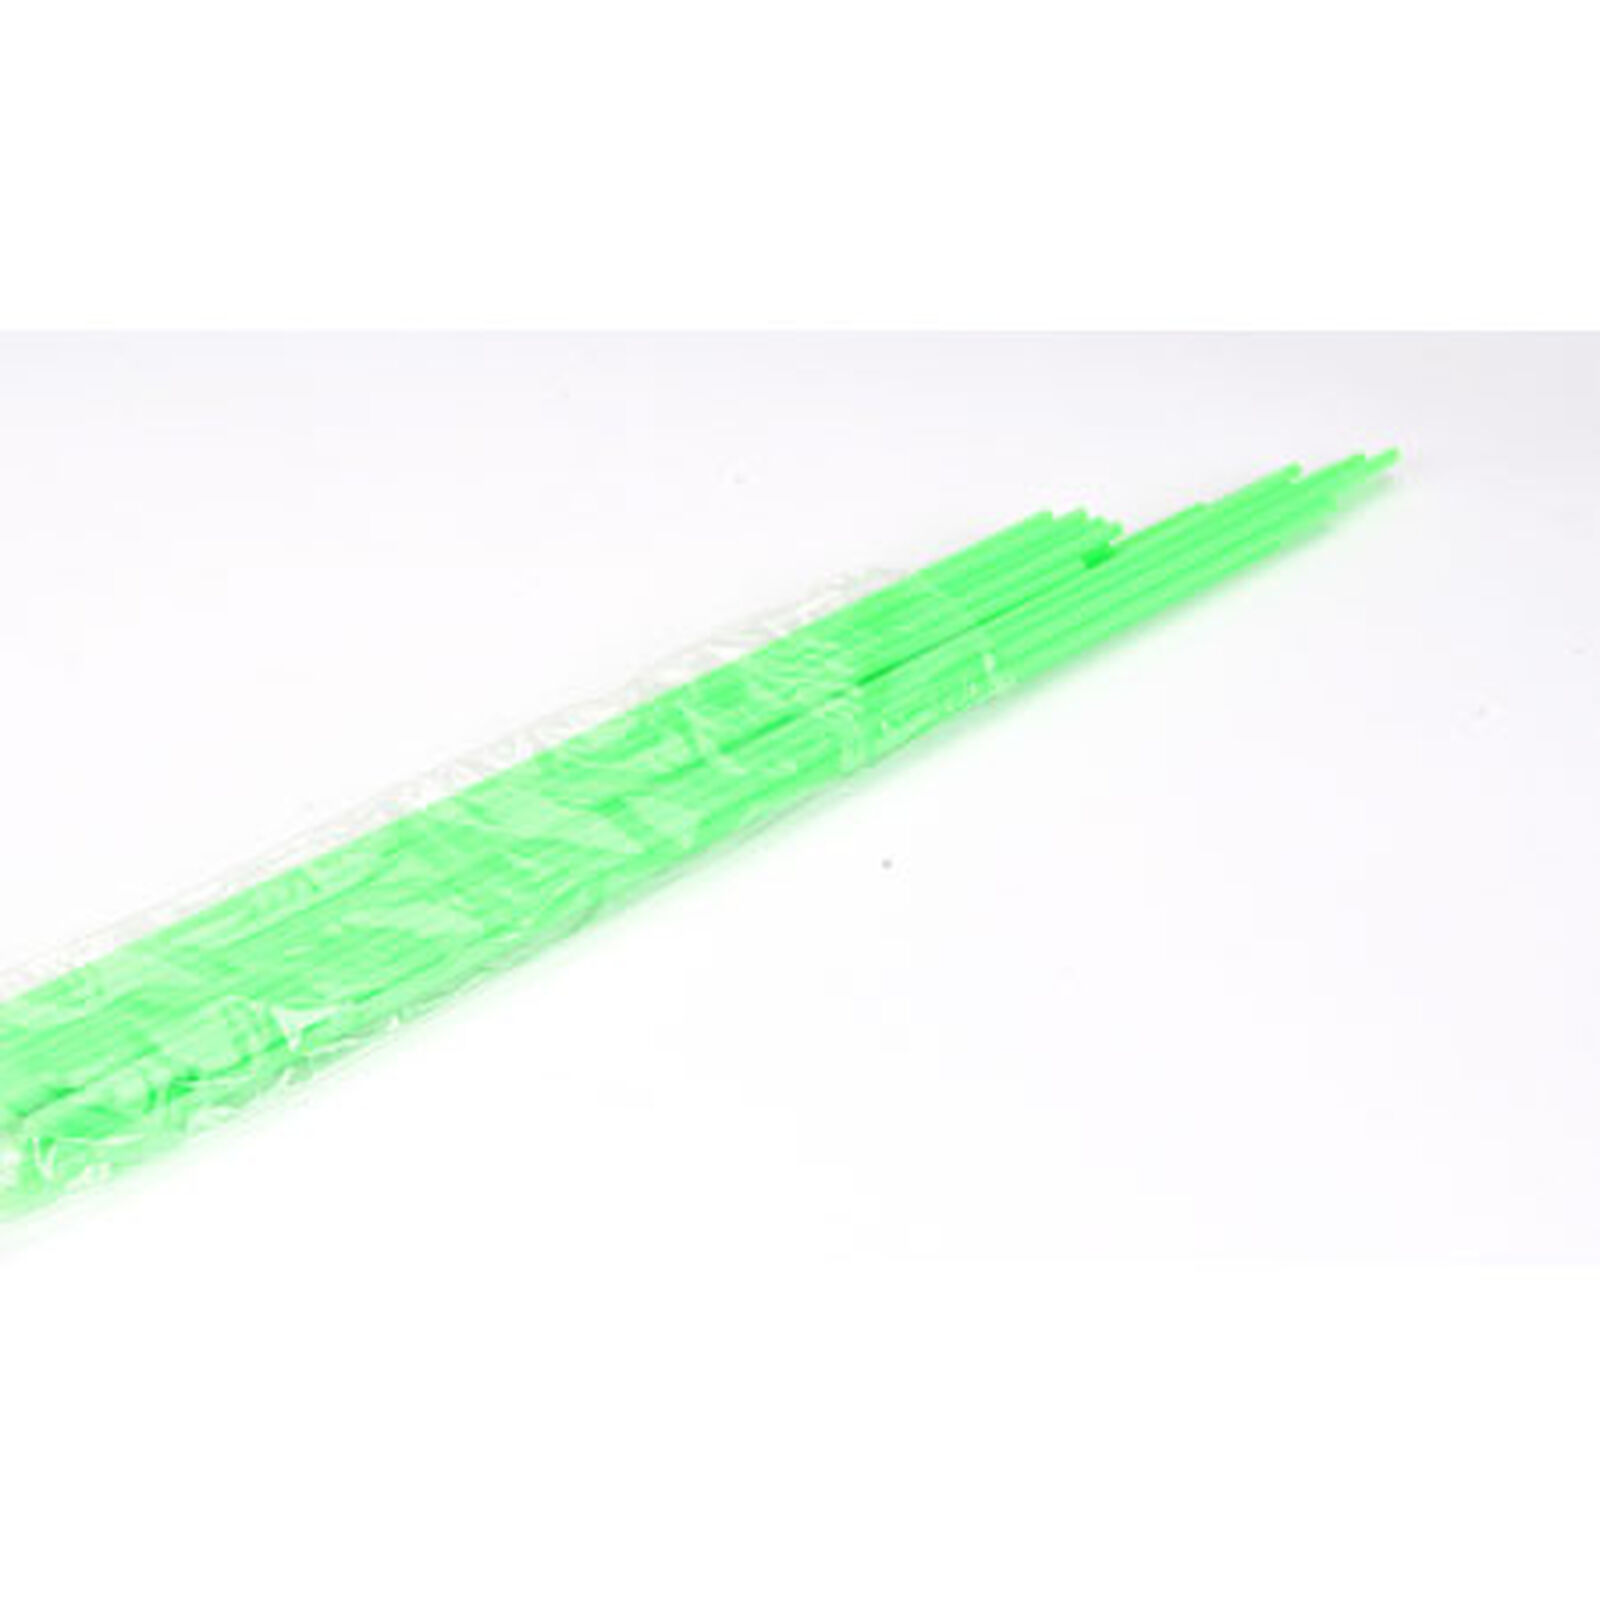 Antenna Tubes, Neon Green (24)